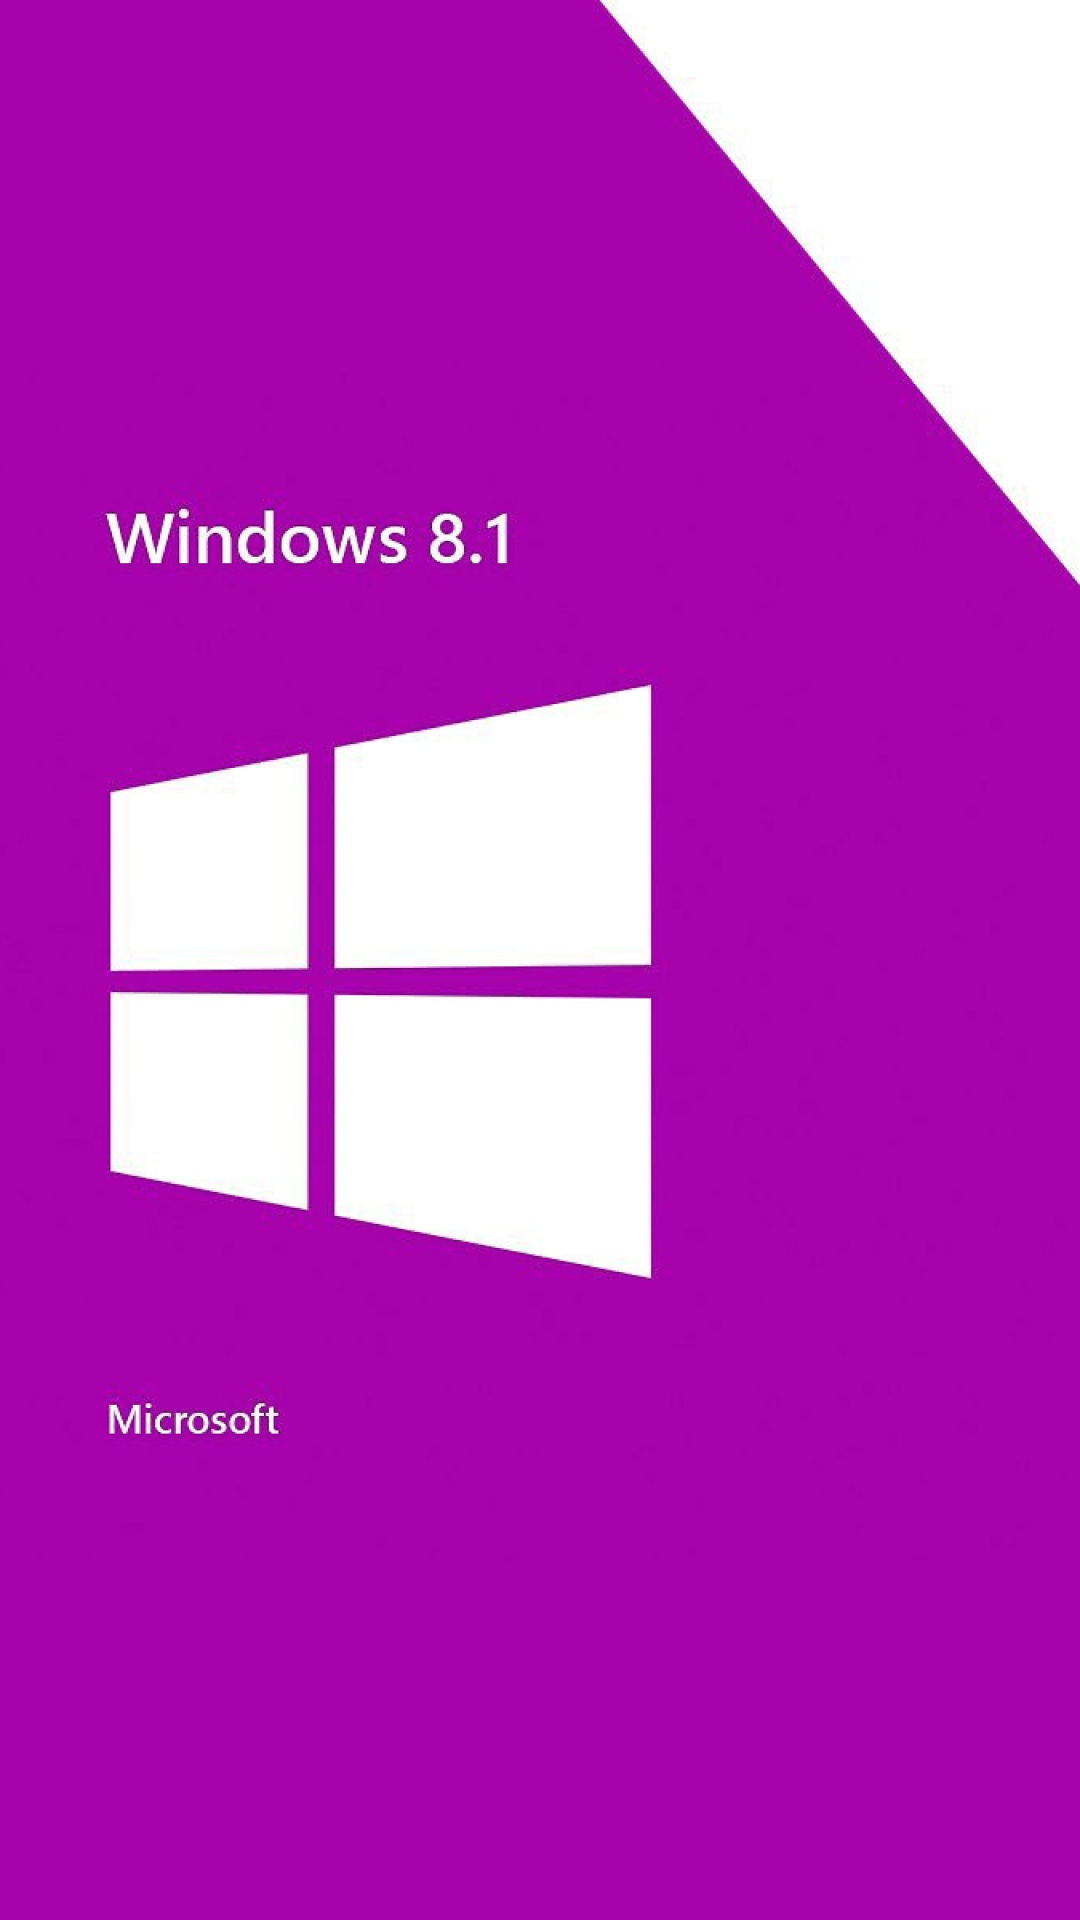 Das Windows 8 Wallpaper 1080x1920